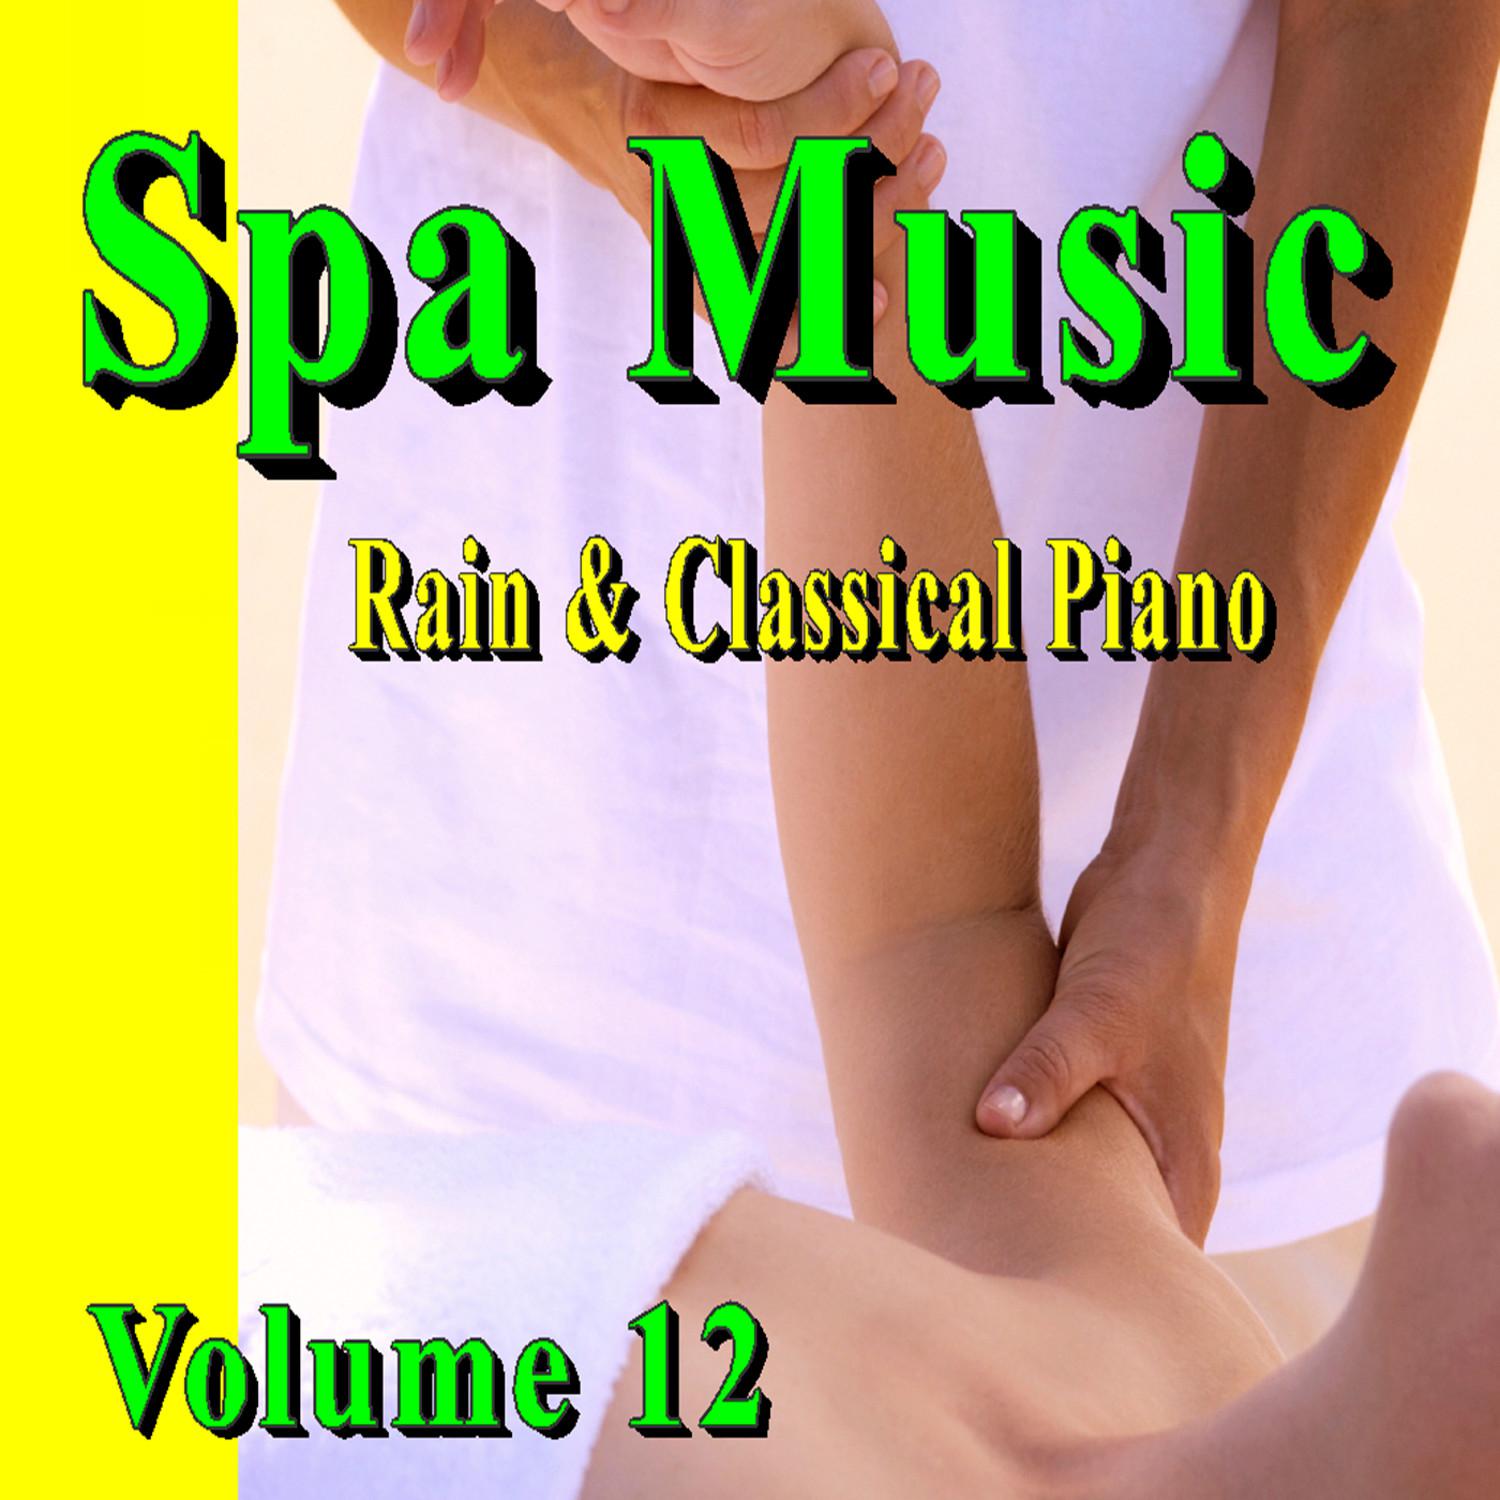 Spa Music (Rain & Classical Piano) Volume 12